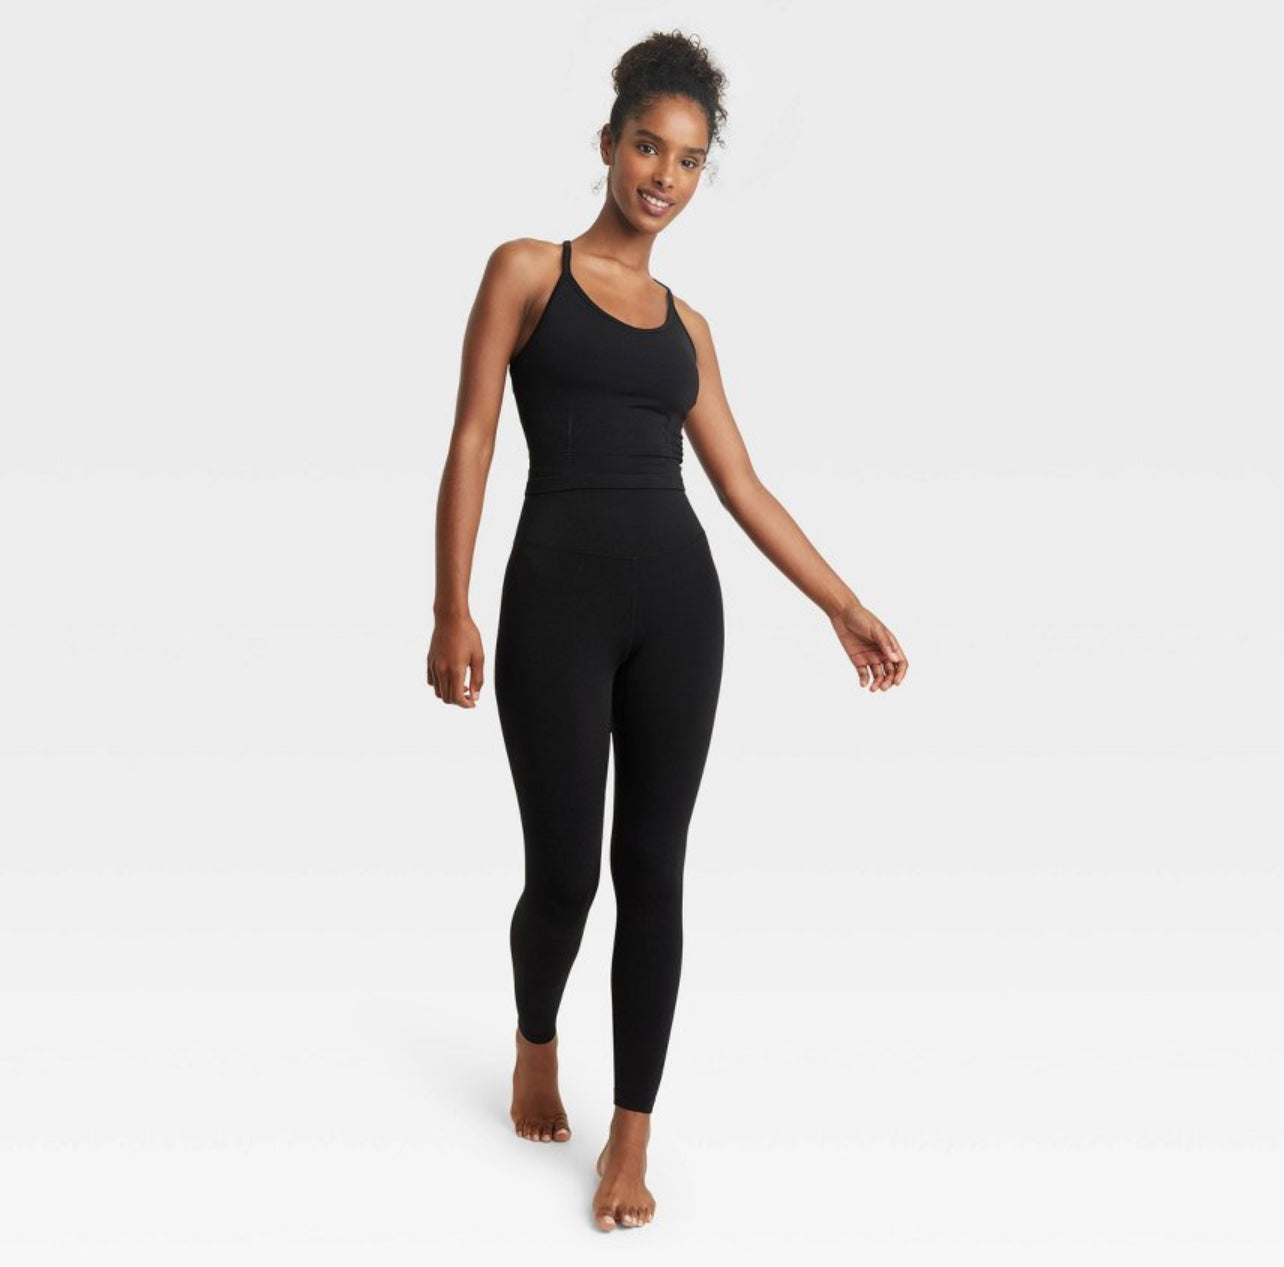 Women's High-rise Textured Seamless 7/8 Leggings - Joylab™ Dark